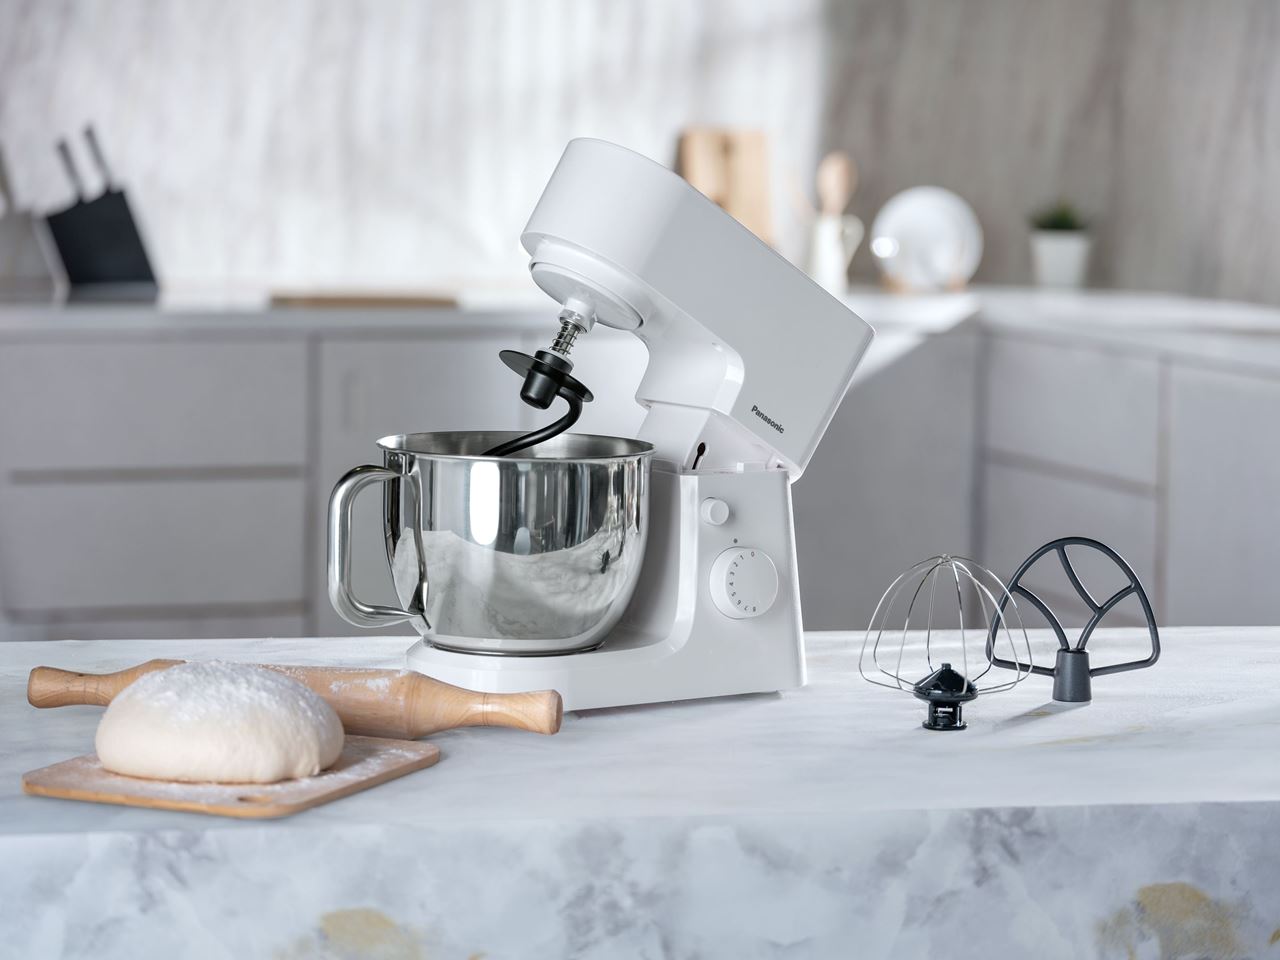 Panasonic’s New Kitchen Machine MK-CM300 is Enrich Baking Experiences this Ramadan